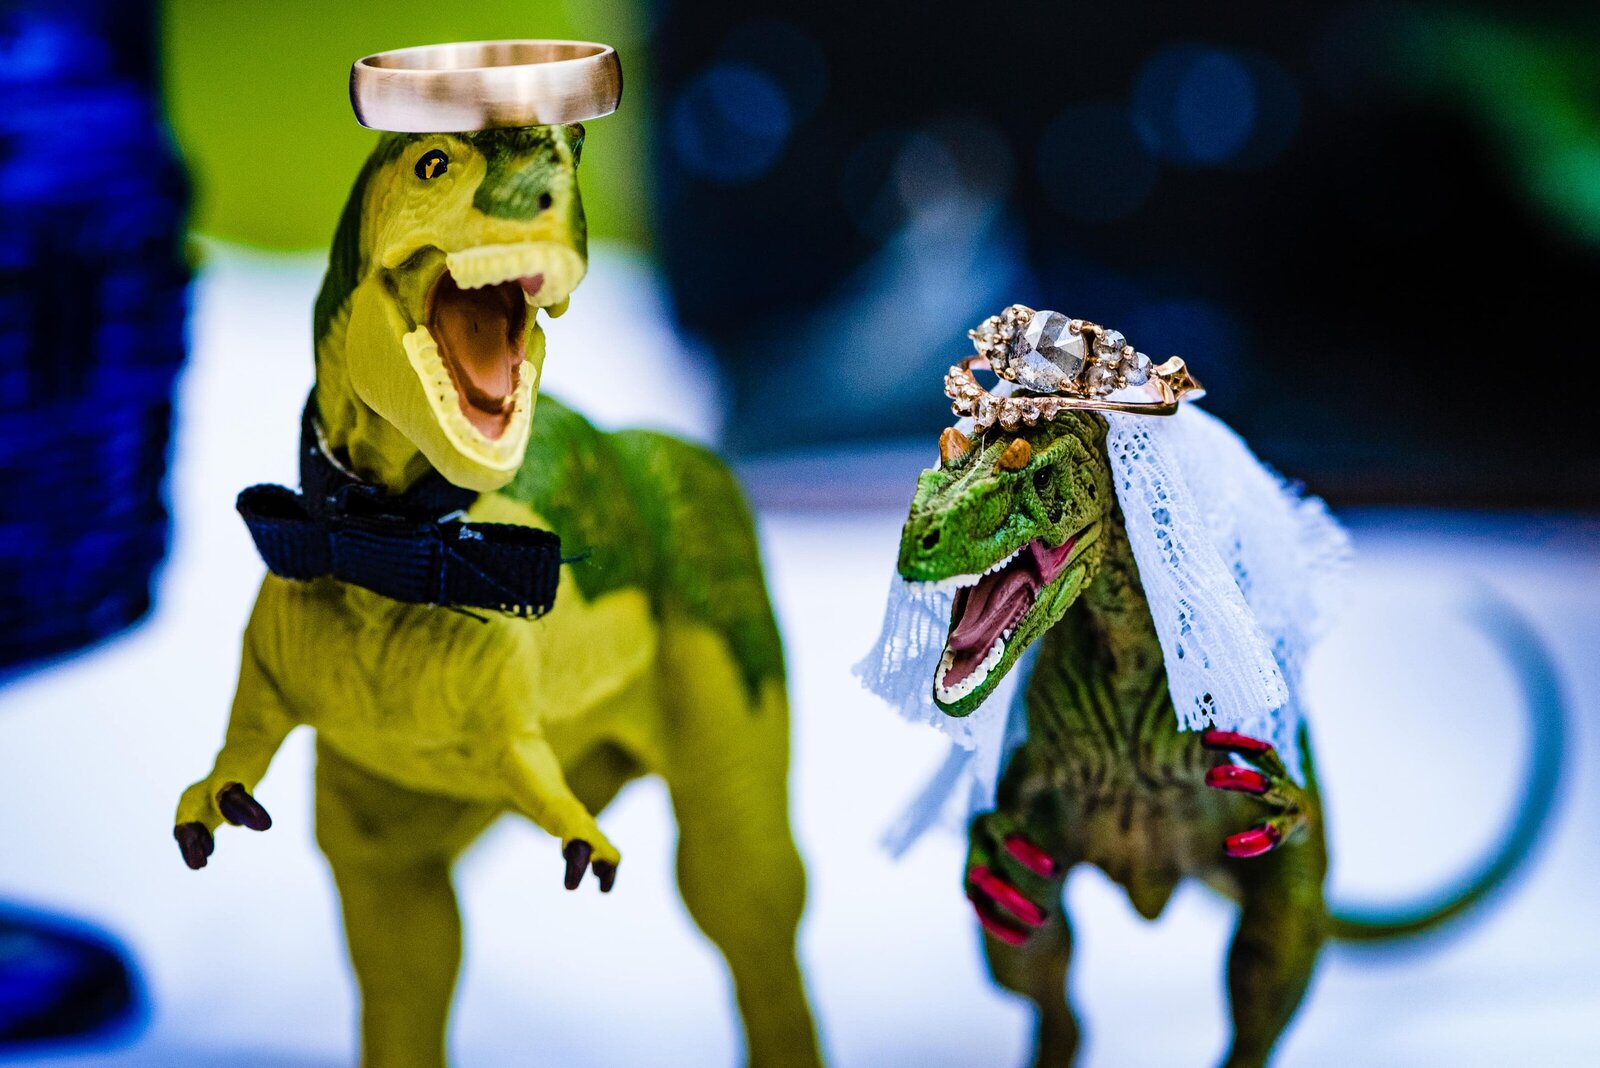 wedding rings set on top of toy dinosaurs look like crowns